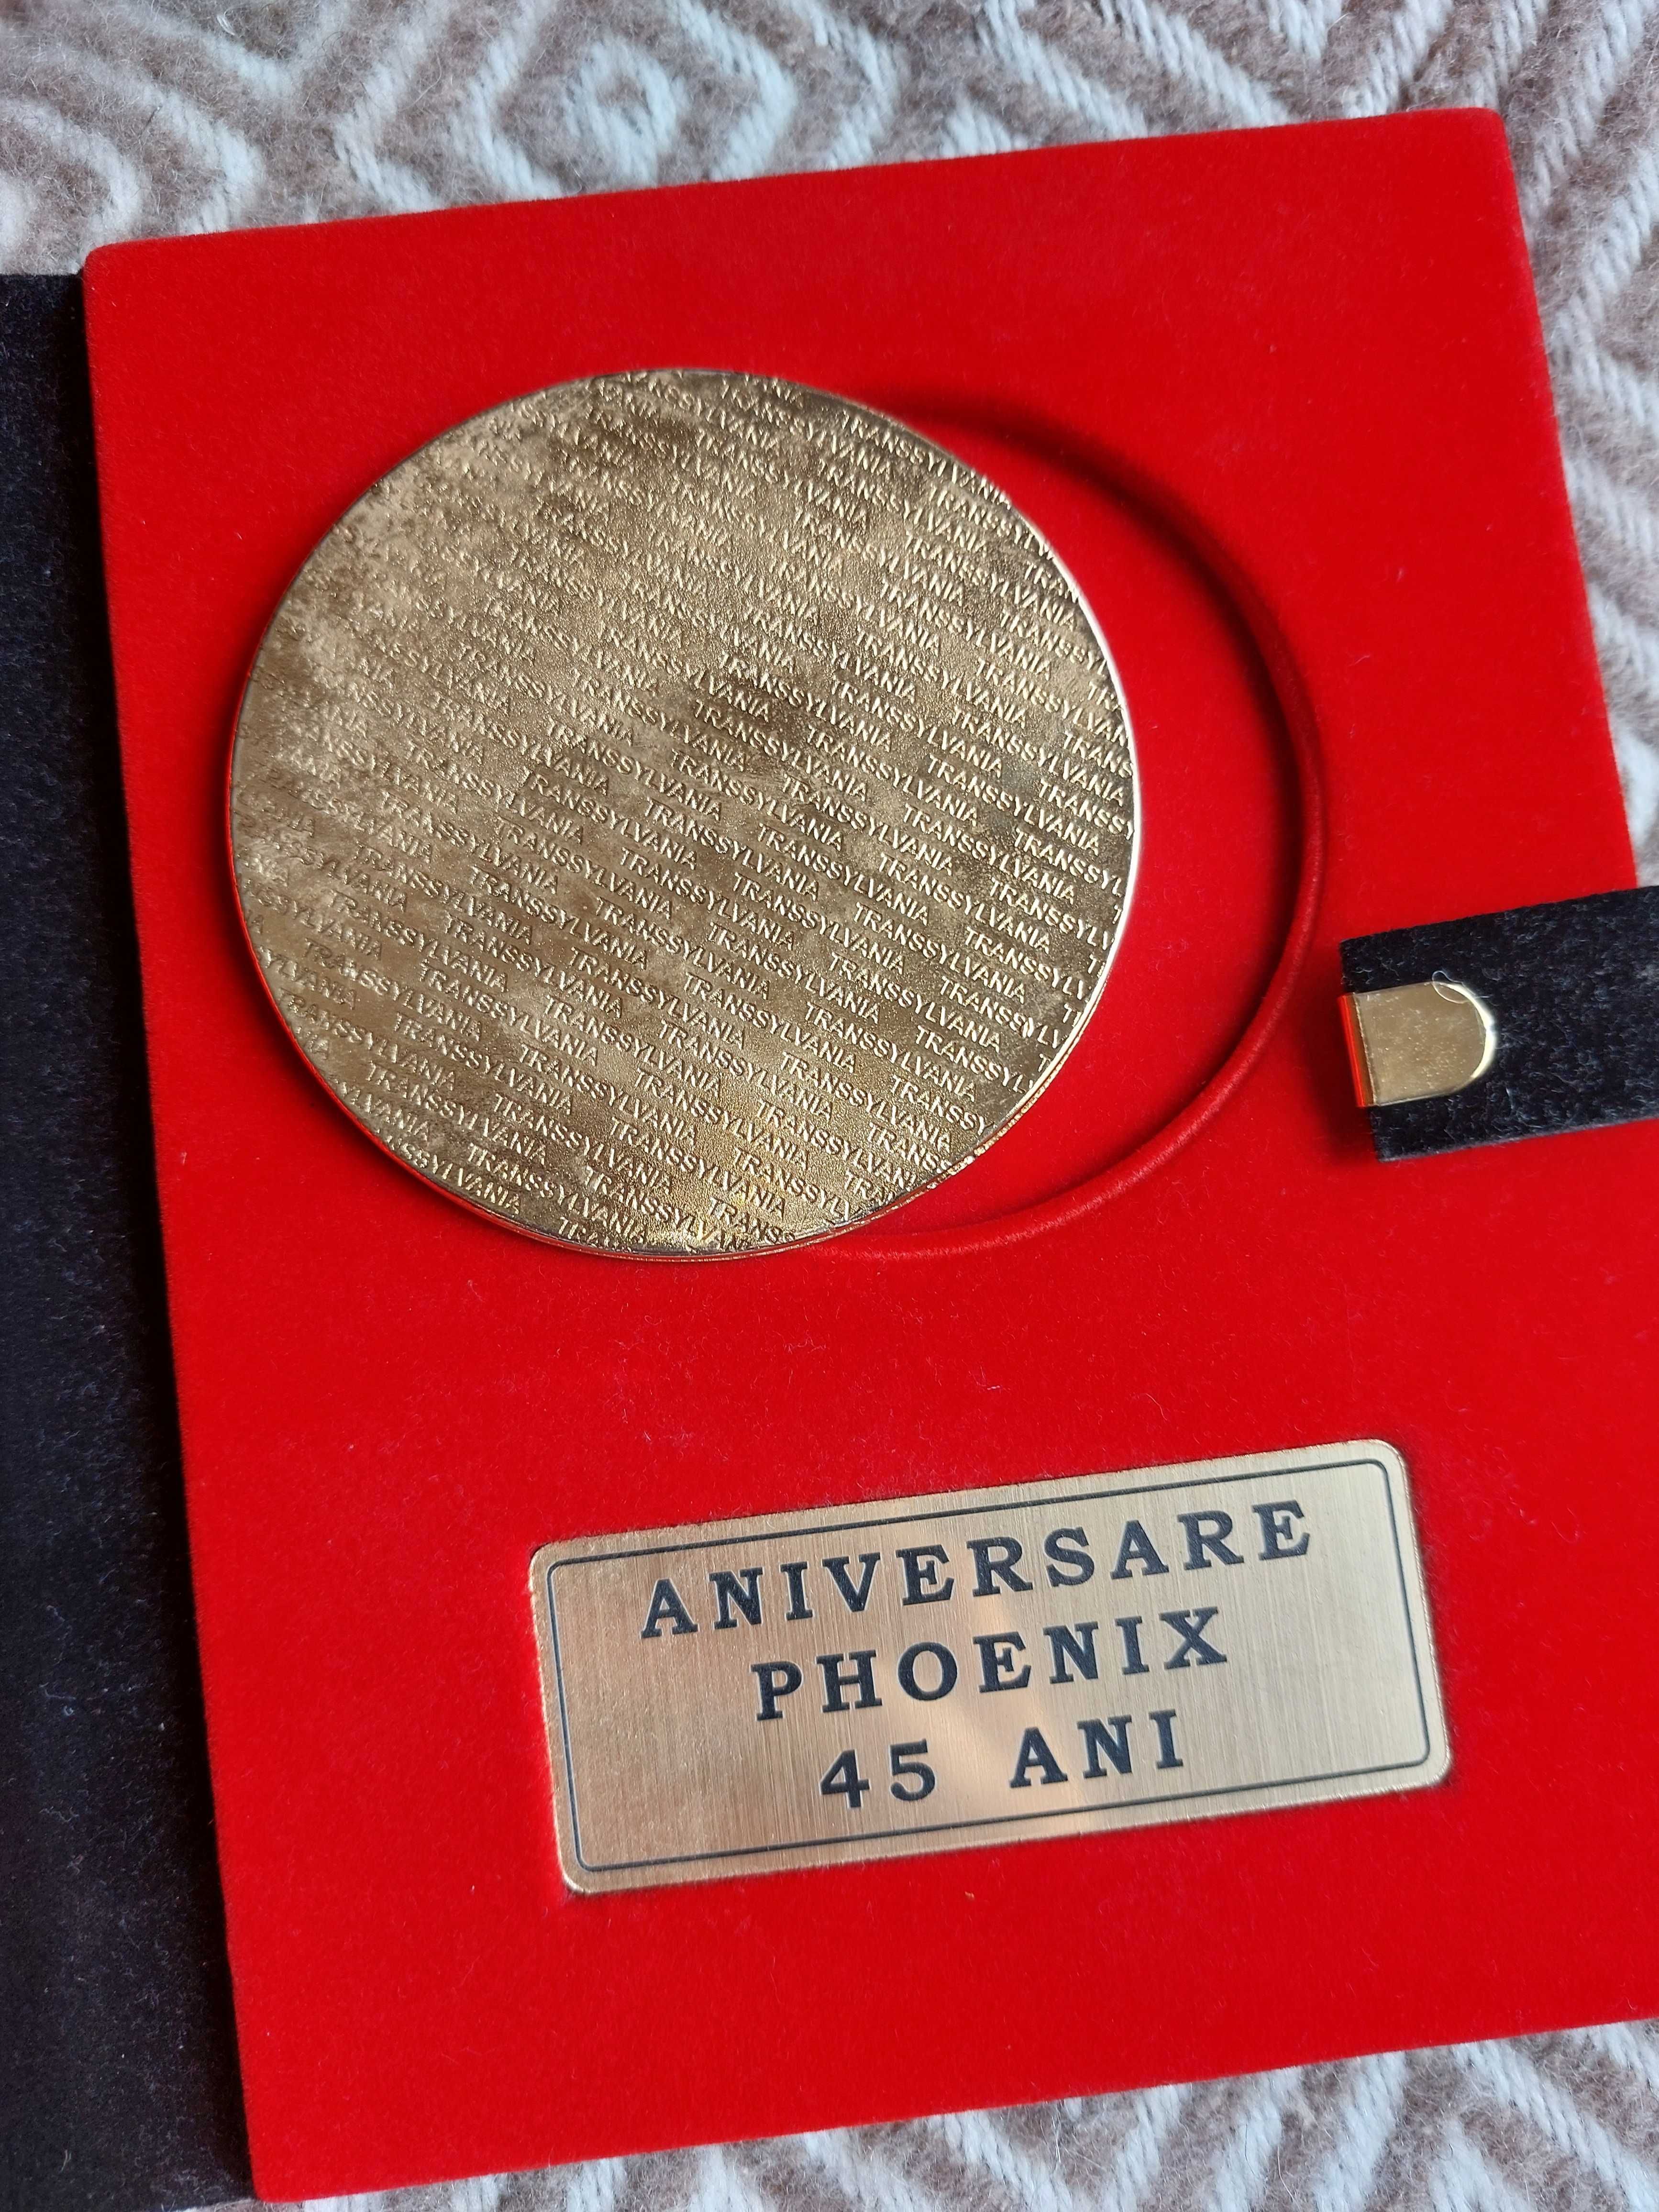 Medalie Aniversare Phoenix 45 ani, 2007, colectie